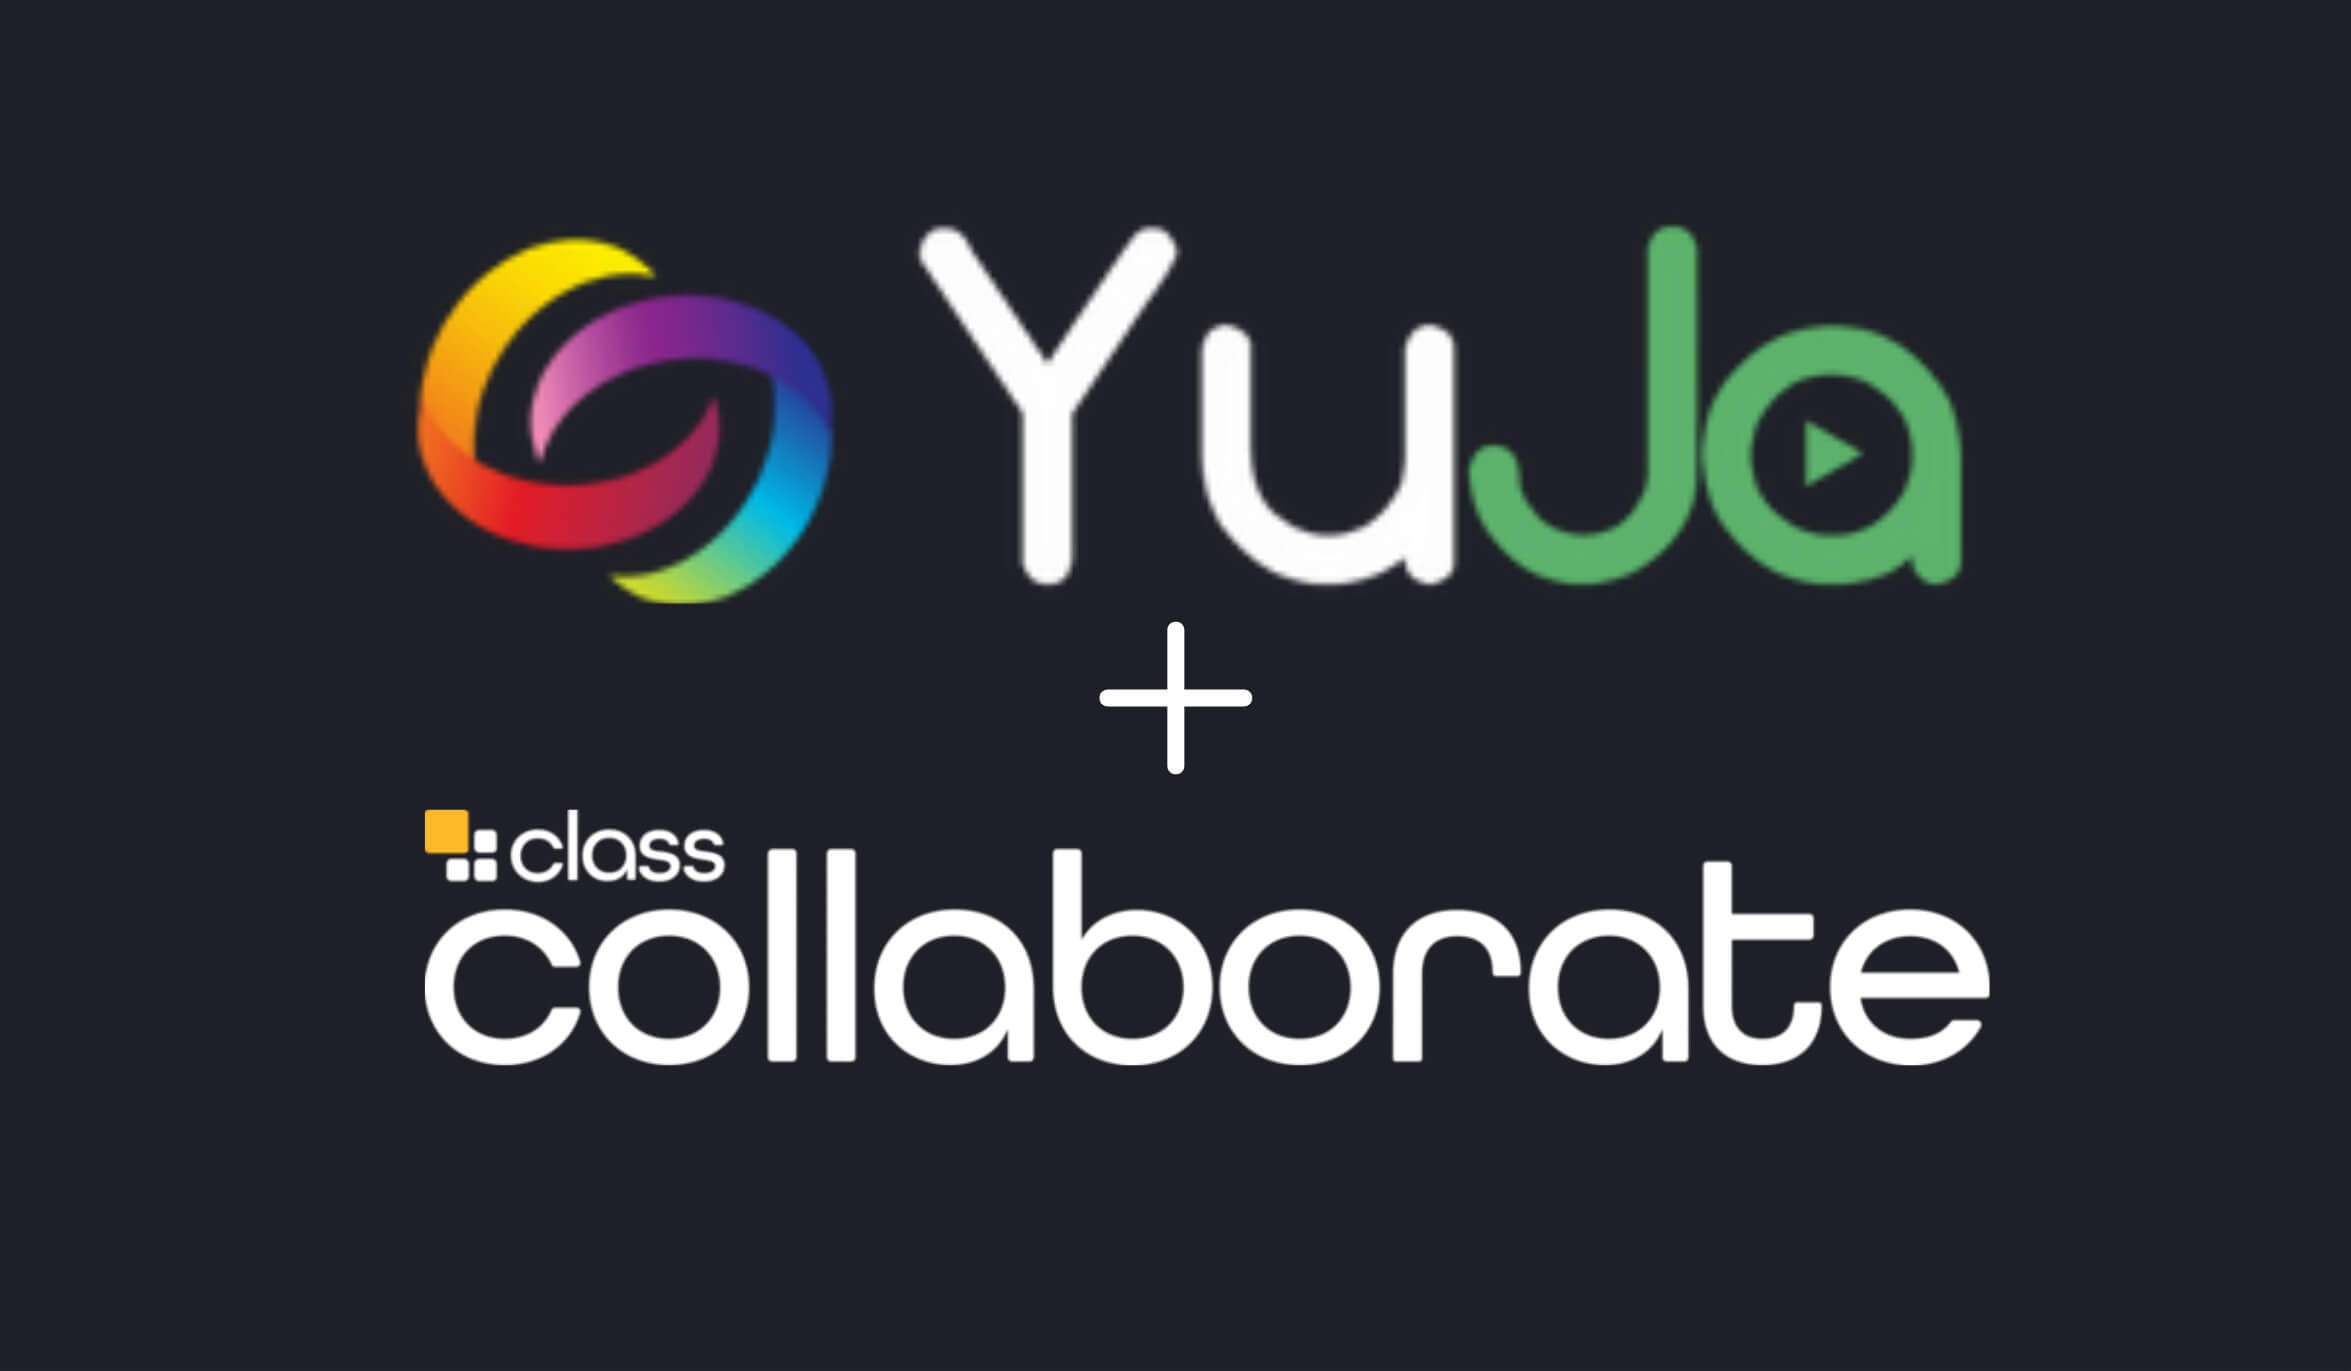 YuJa + Class Collaborate logos.